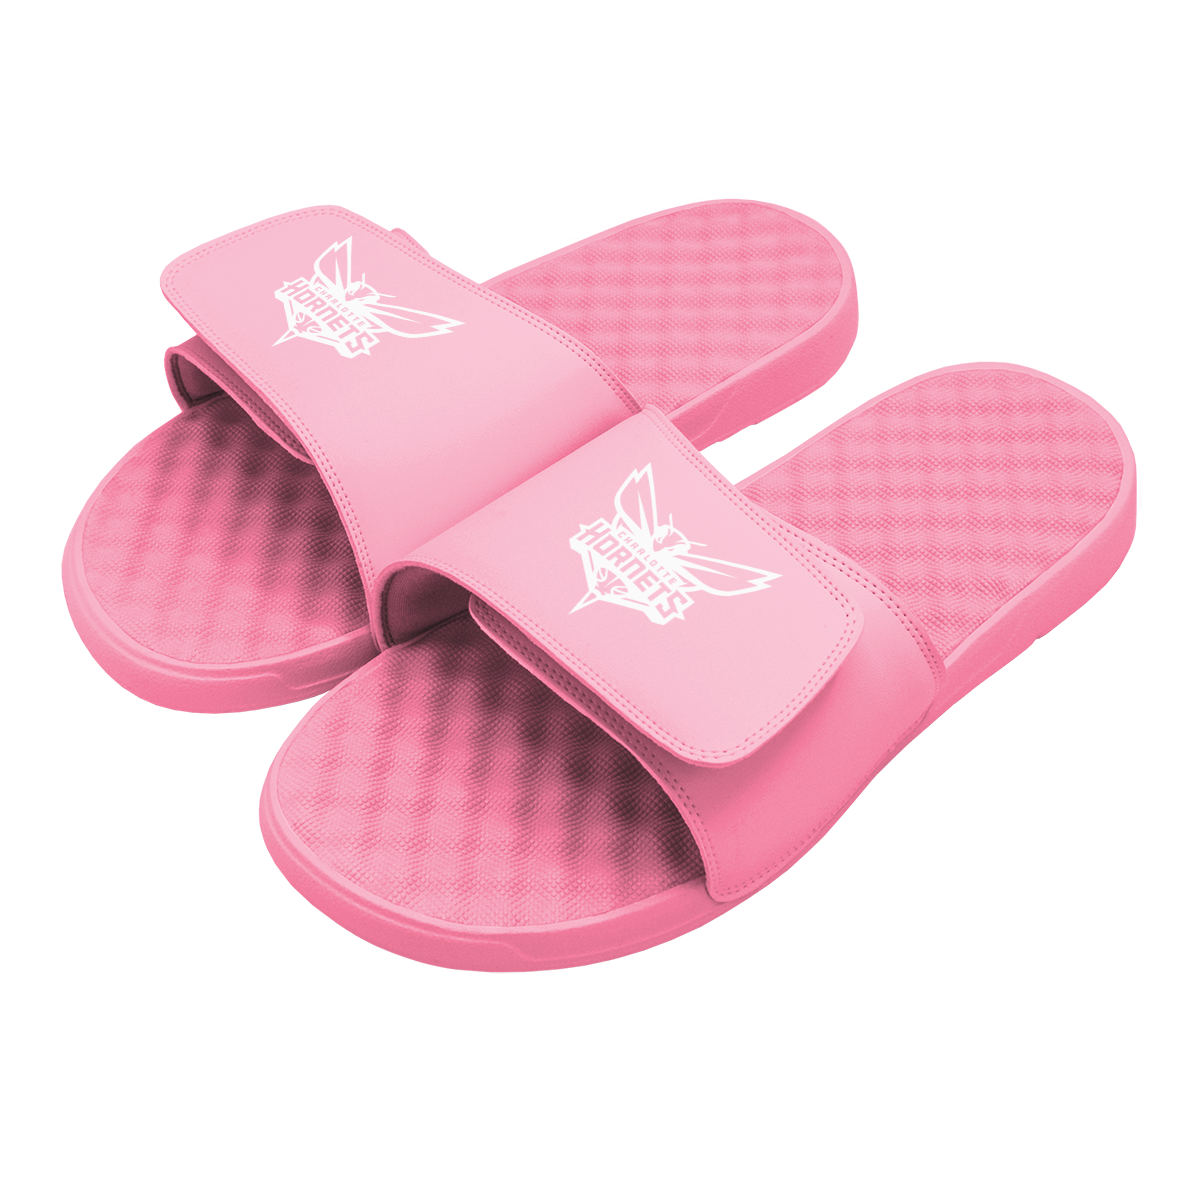 Charlotte Hornets Primary Pink Slides